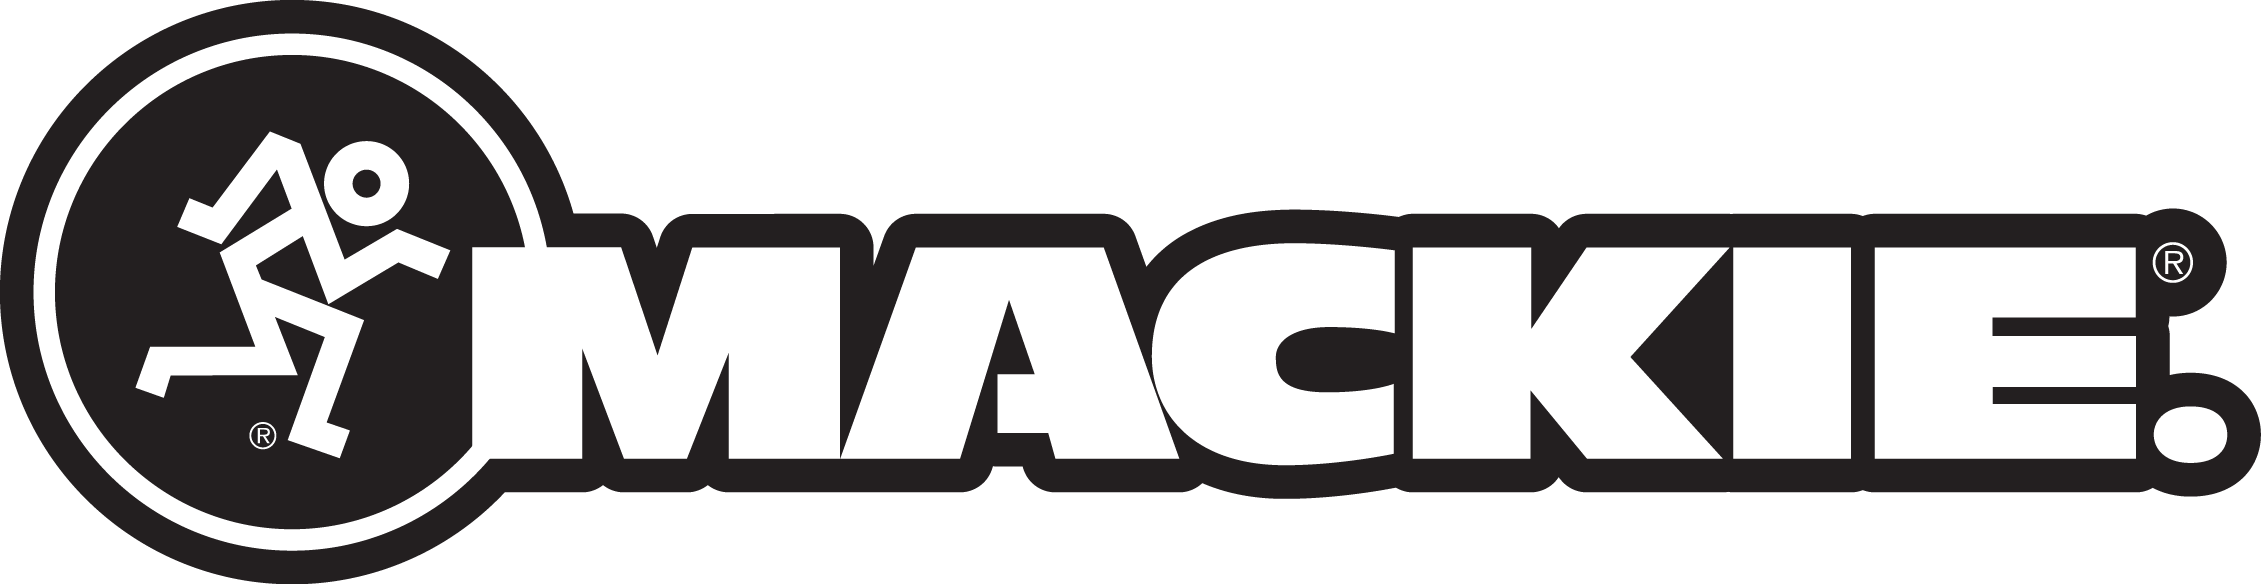 Mackie_Combo_logo-black-outline.png